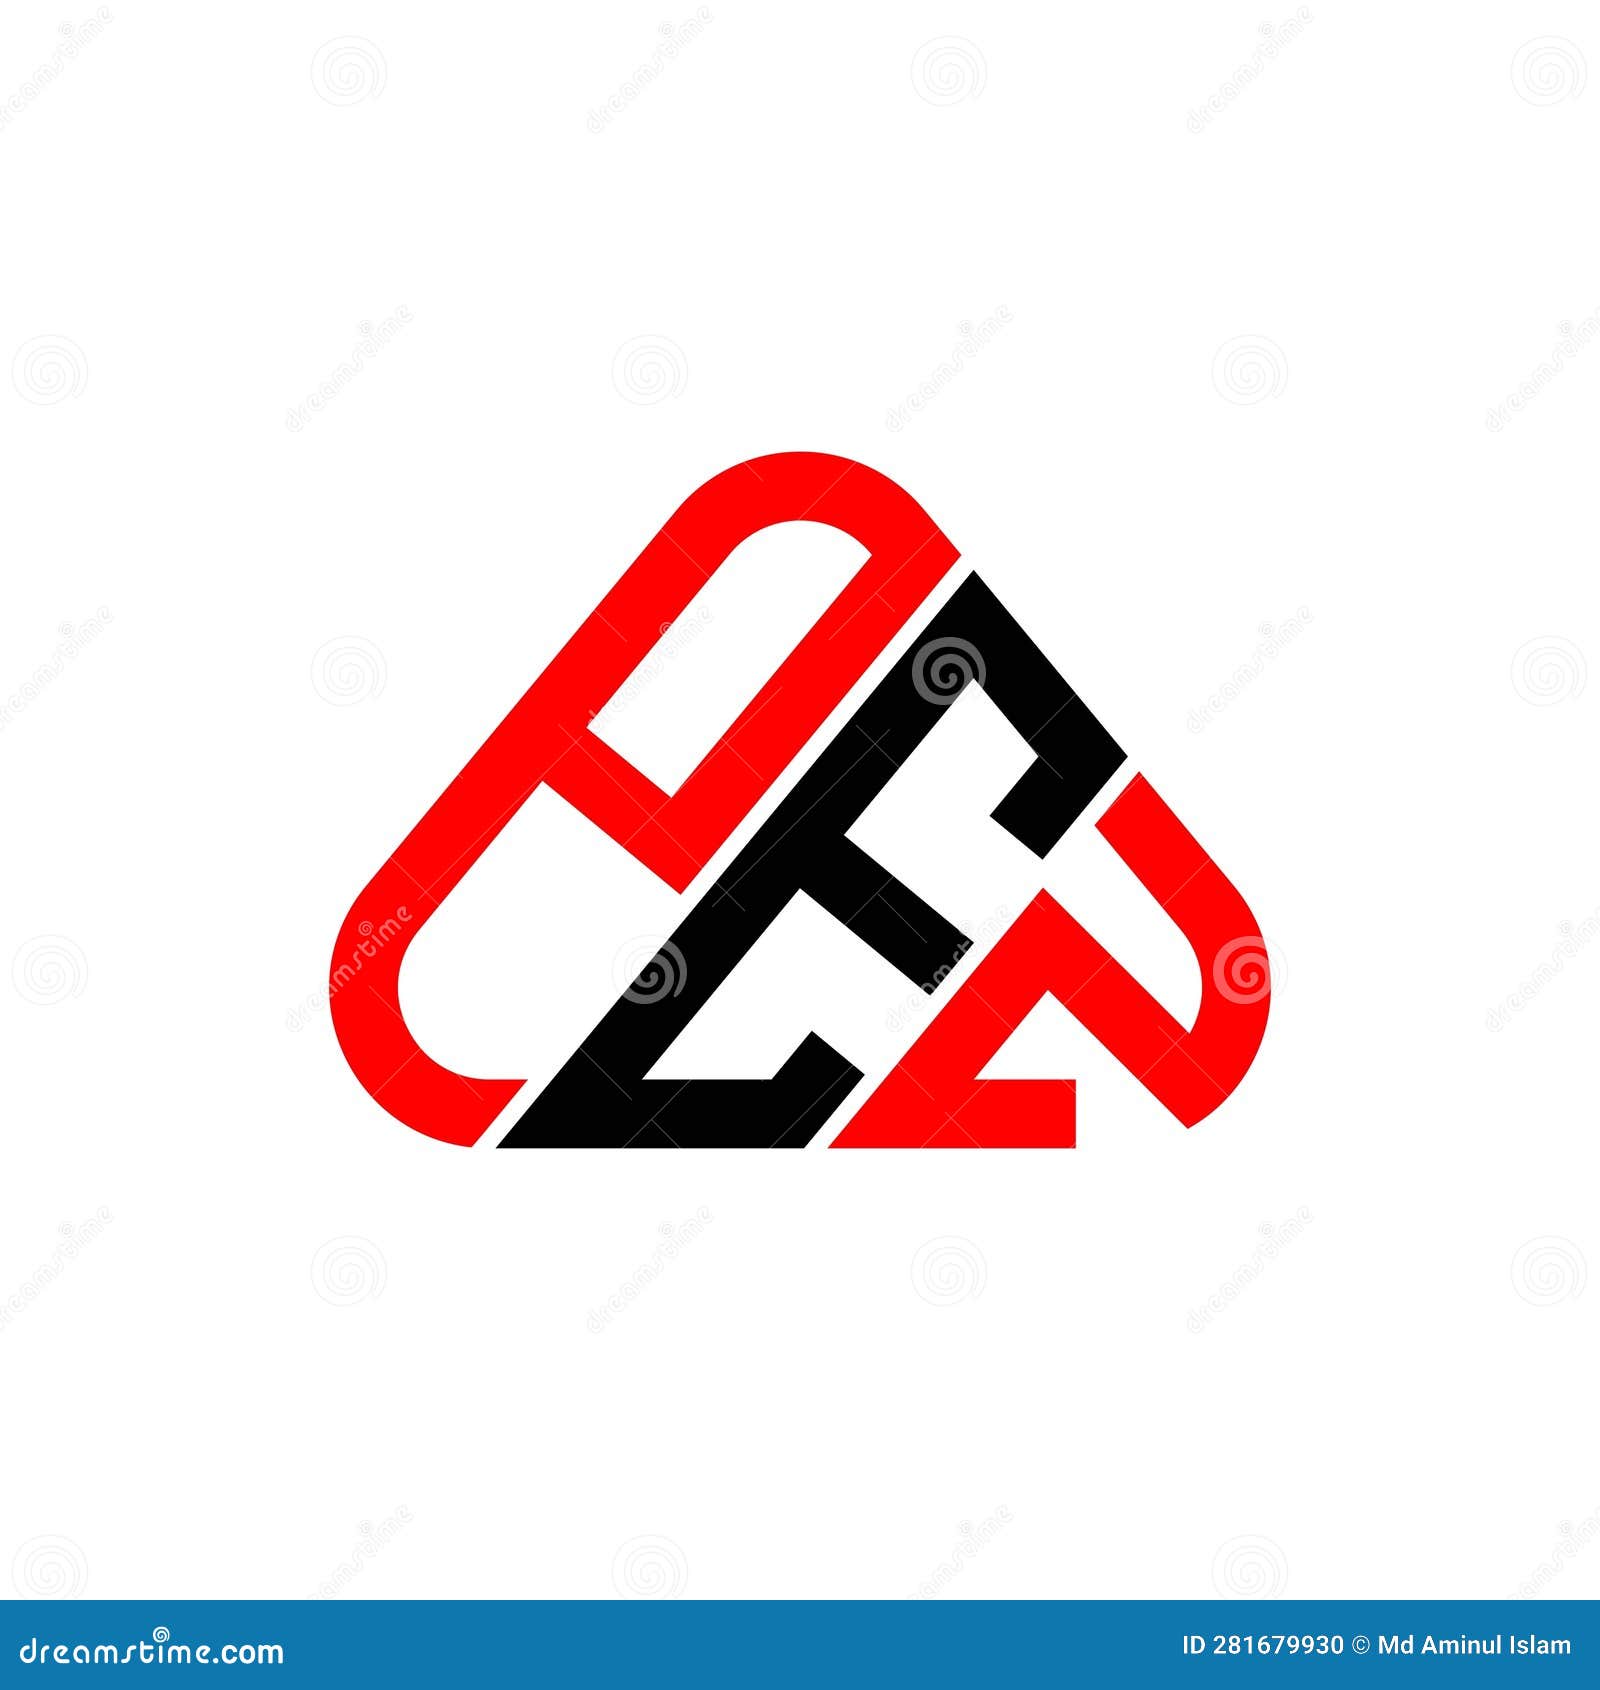 pez letter logo creative  with  graphic, pez